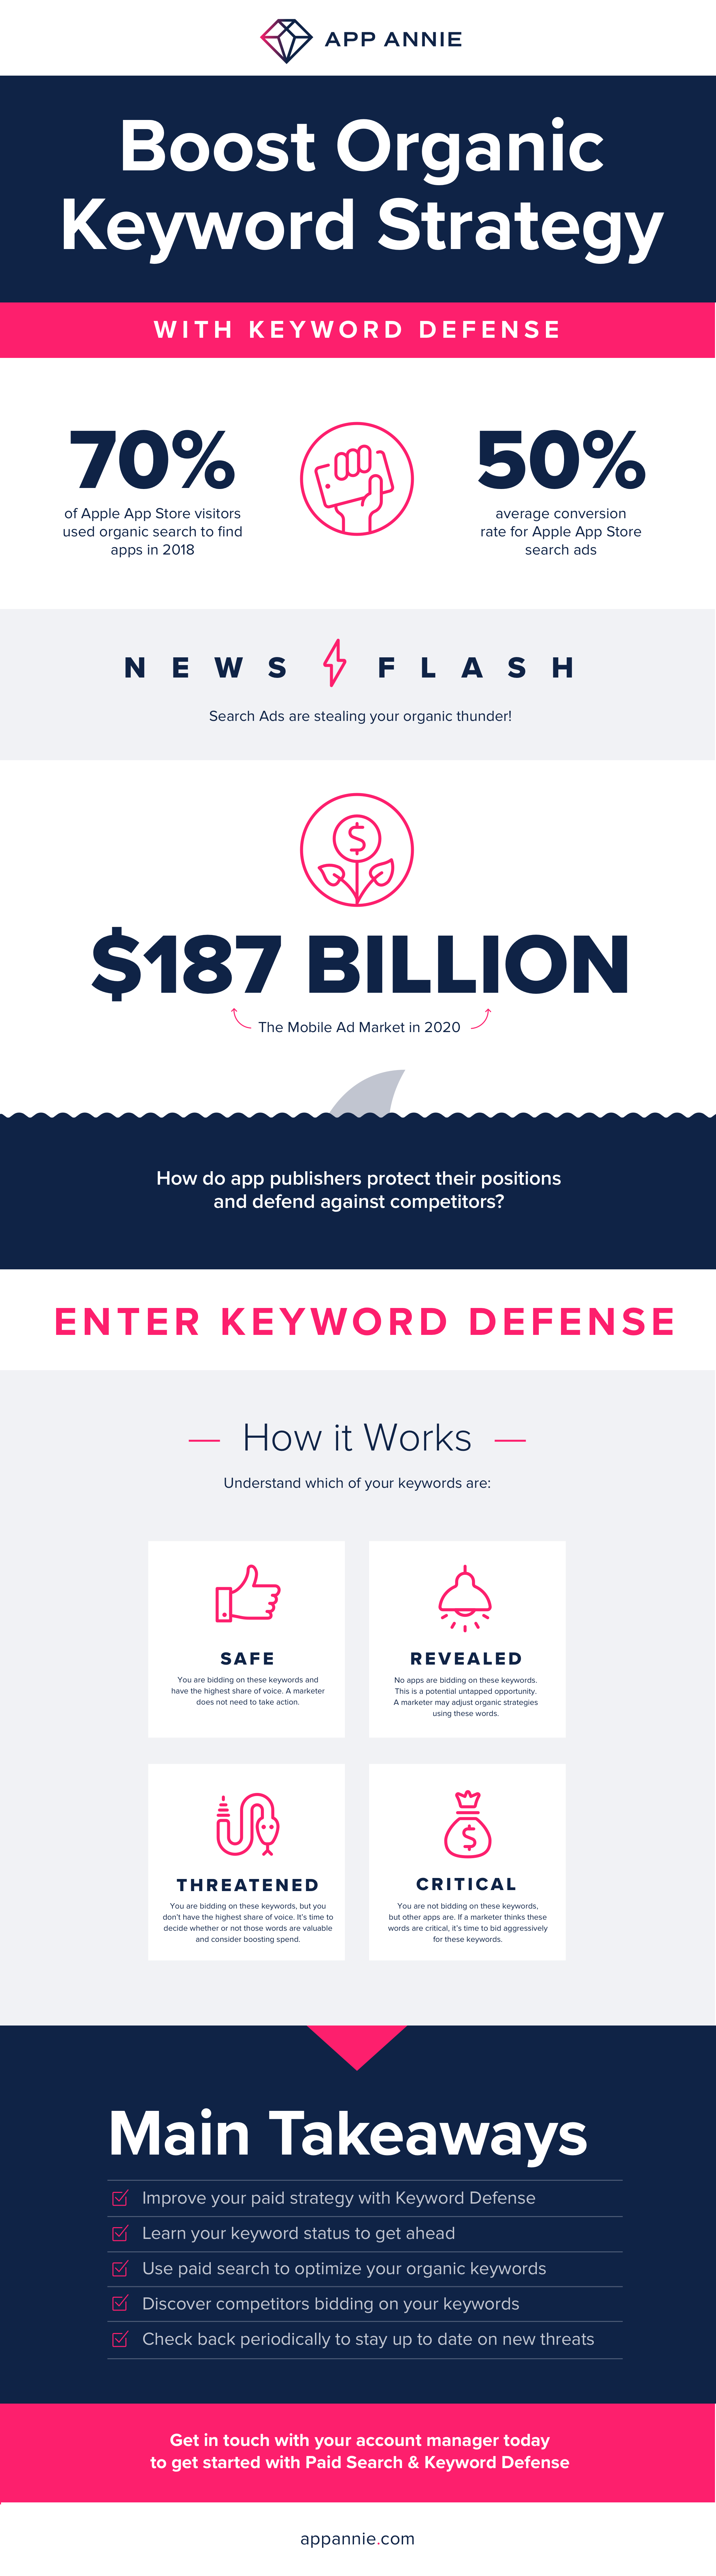 App Annie's Keyword Defense Infographic